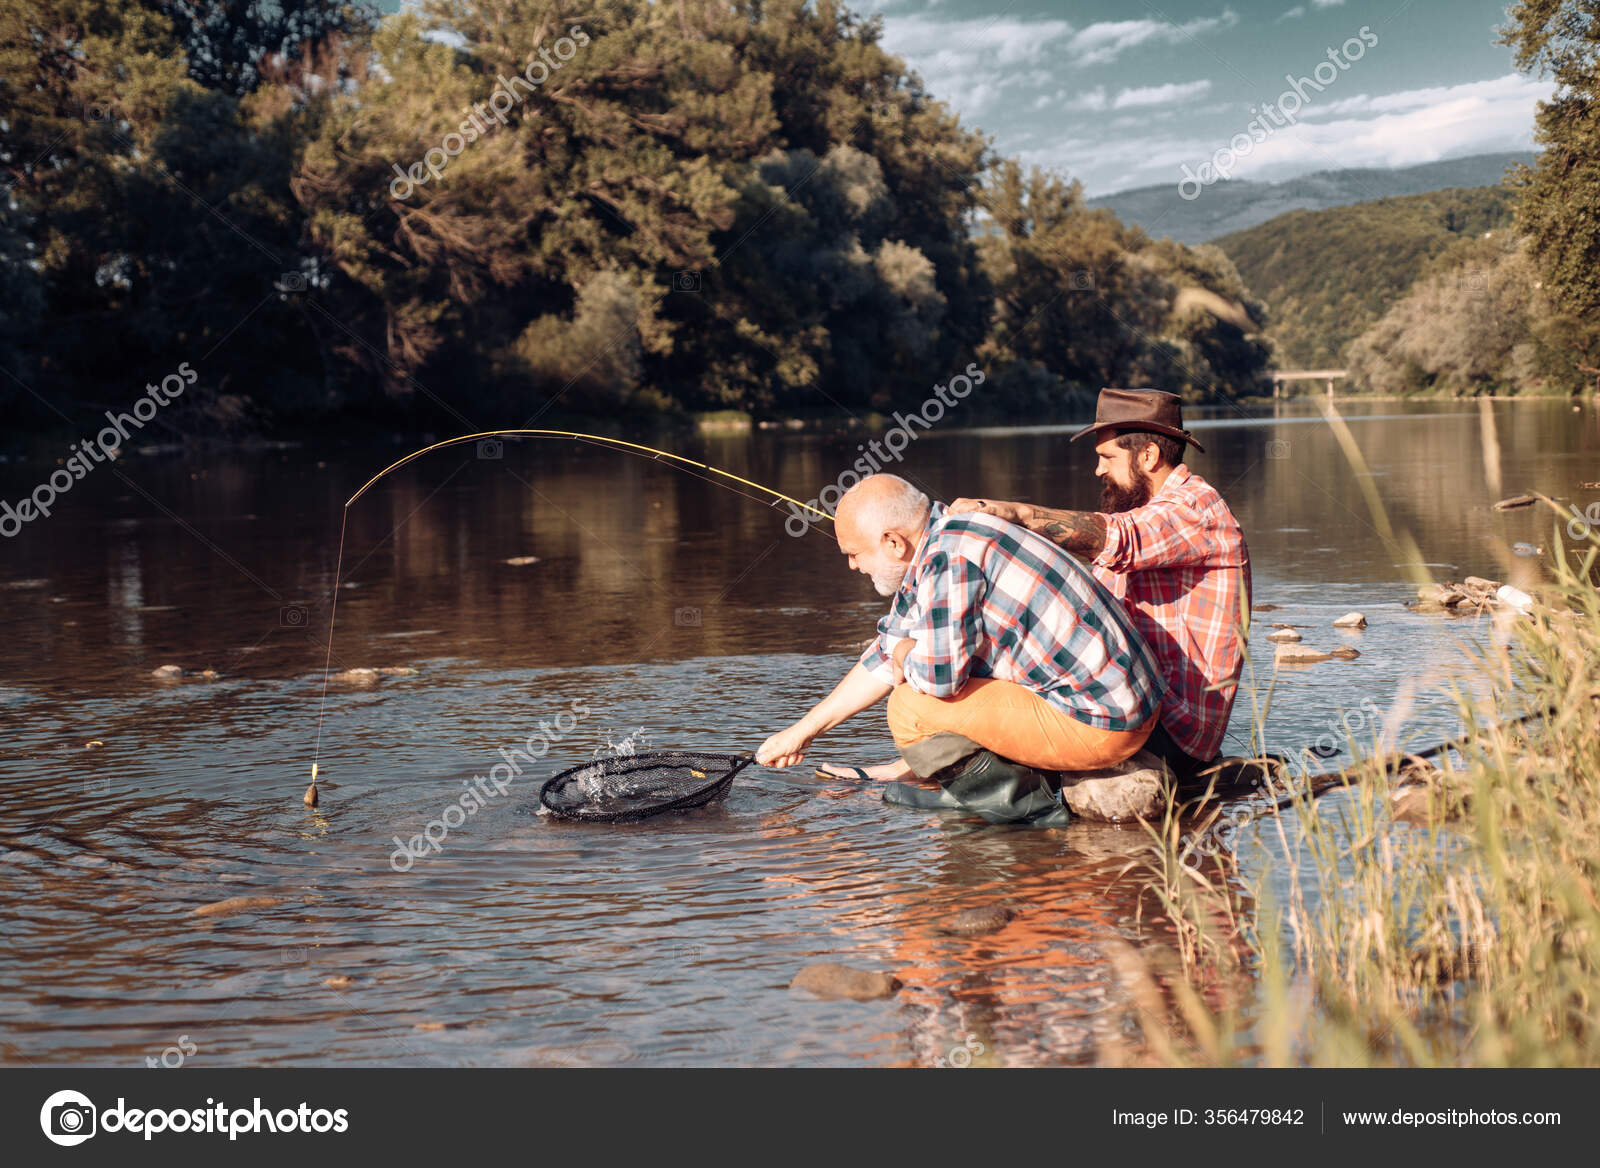 https://st3.depositphotos.com/3584053/35647/i/1600/depositphotos_356479842-stock-photo-father-and-adult-son-fishing.jpg